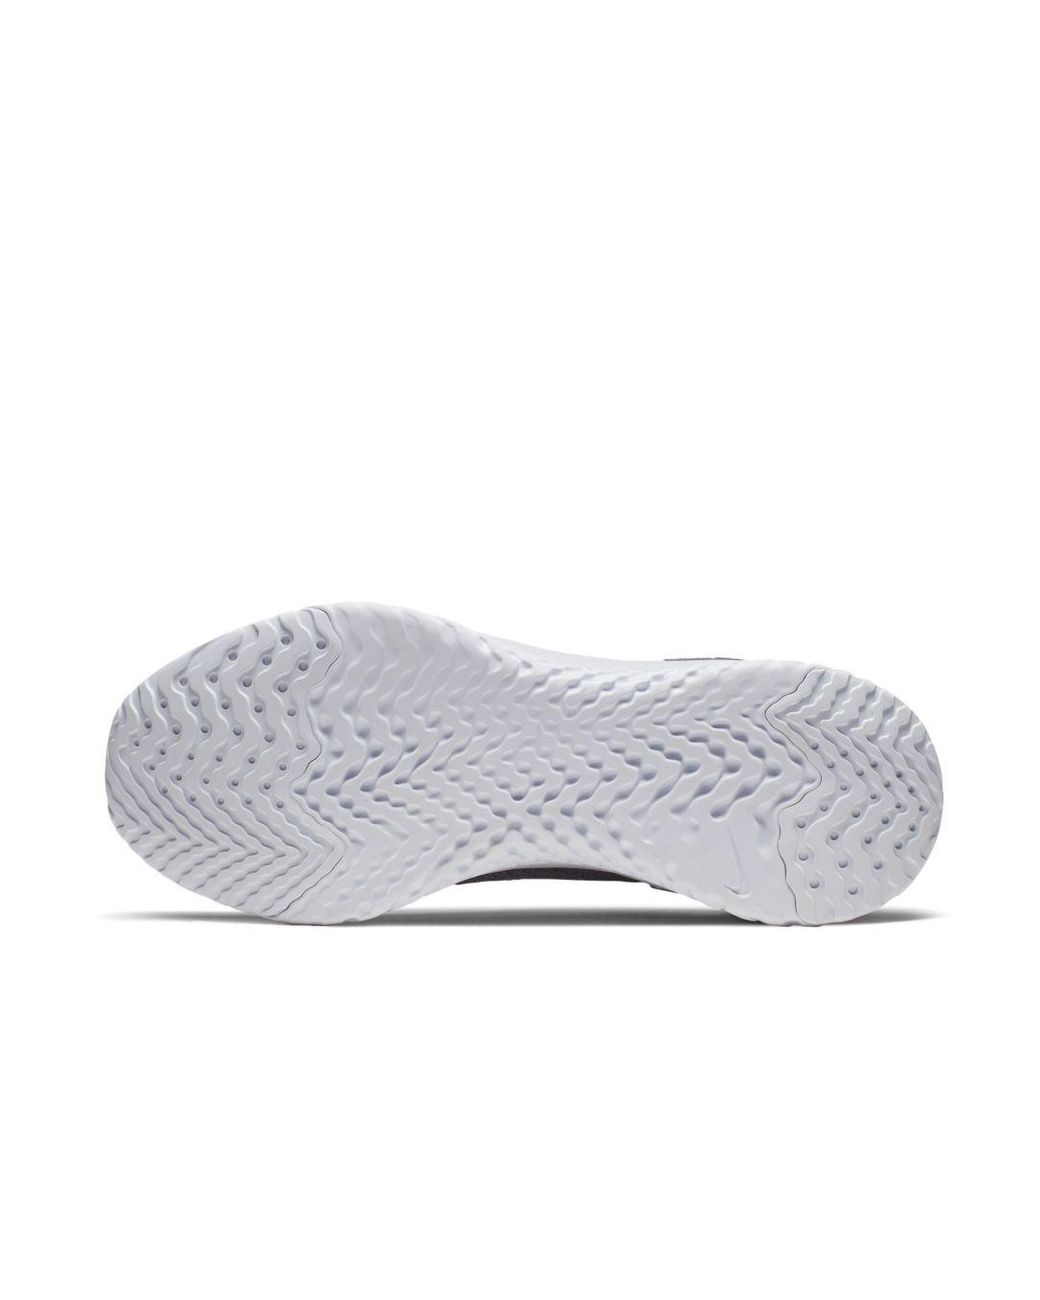 Nike Rubber Epic Phantom React Flyknit Running Shoe in Grey/White (Gray) |  Lyst